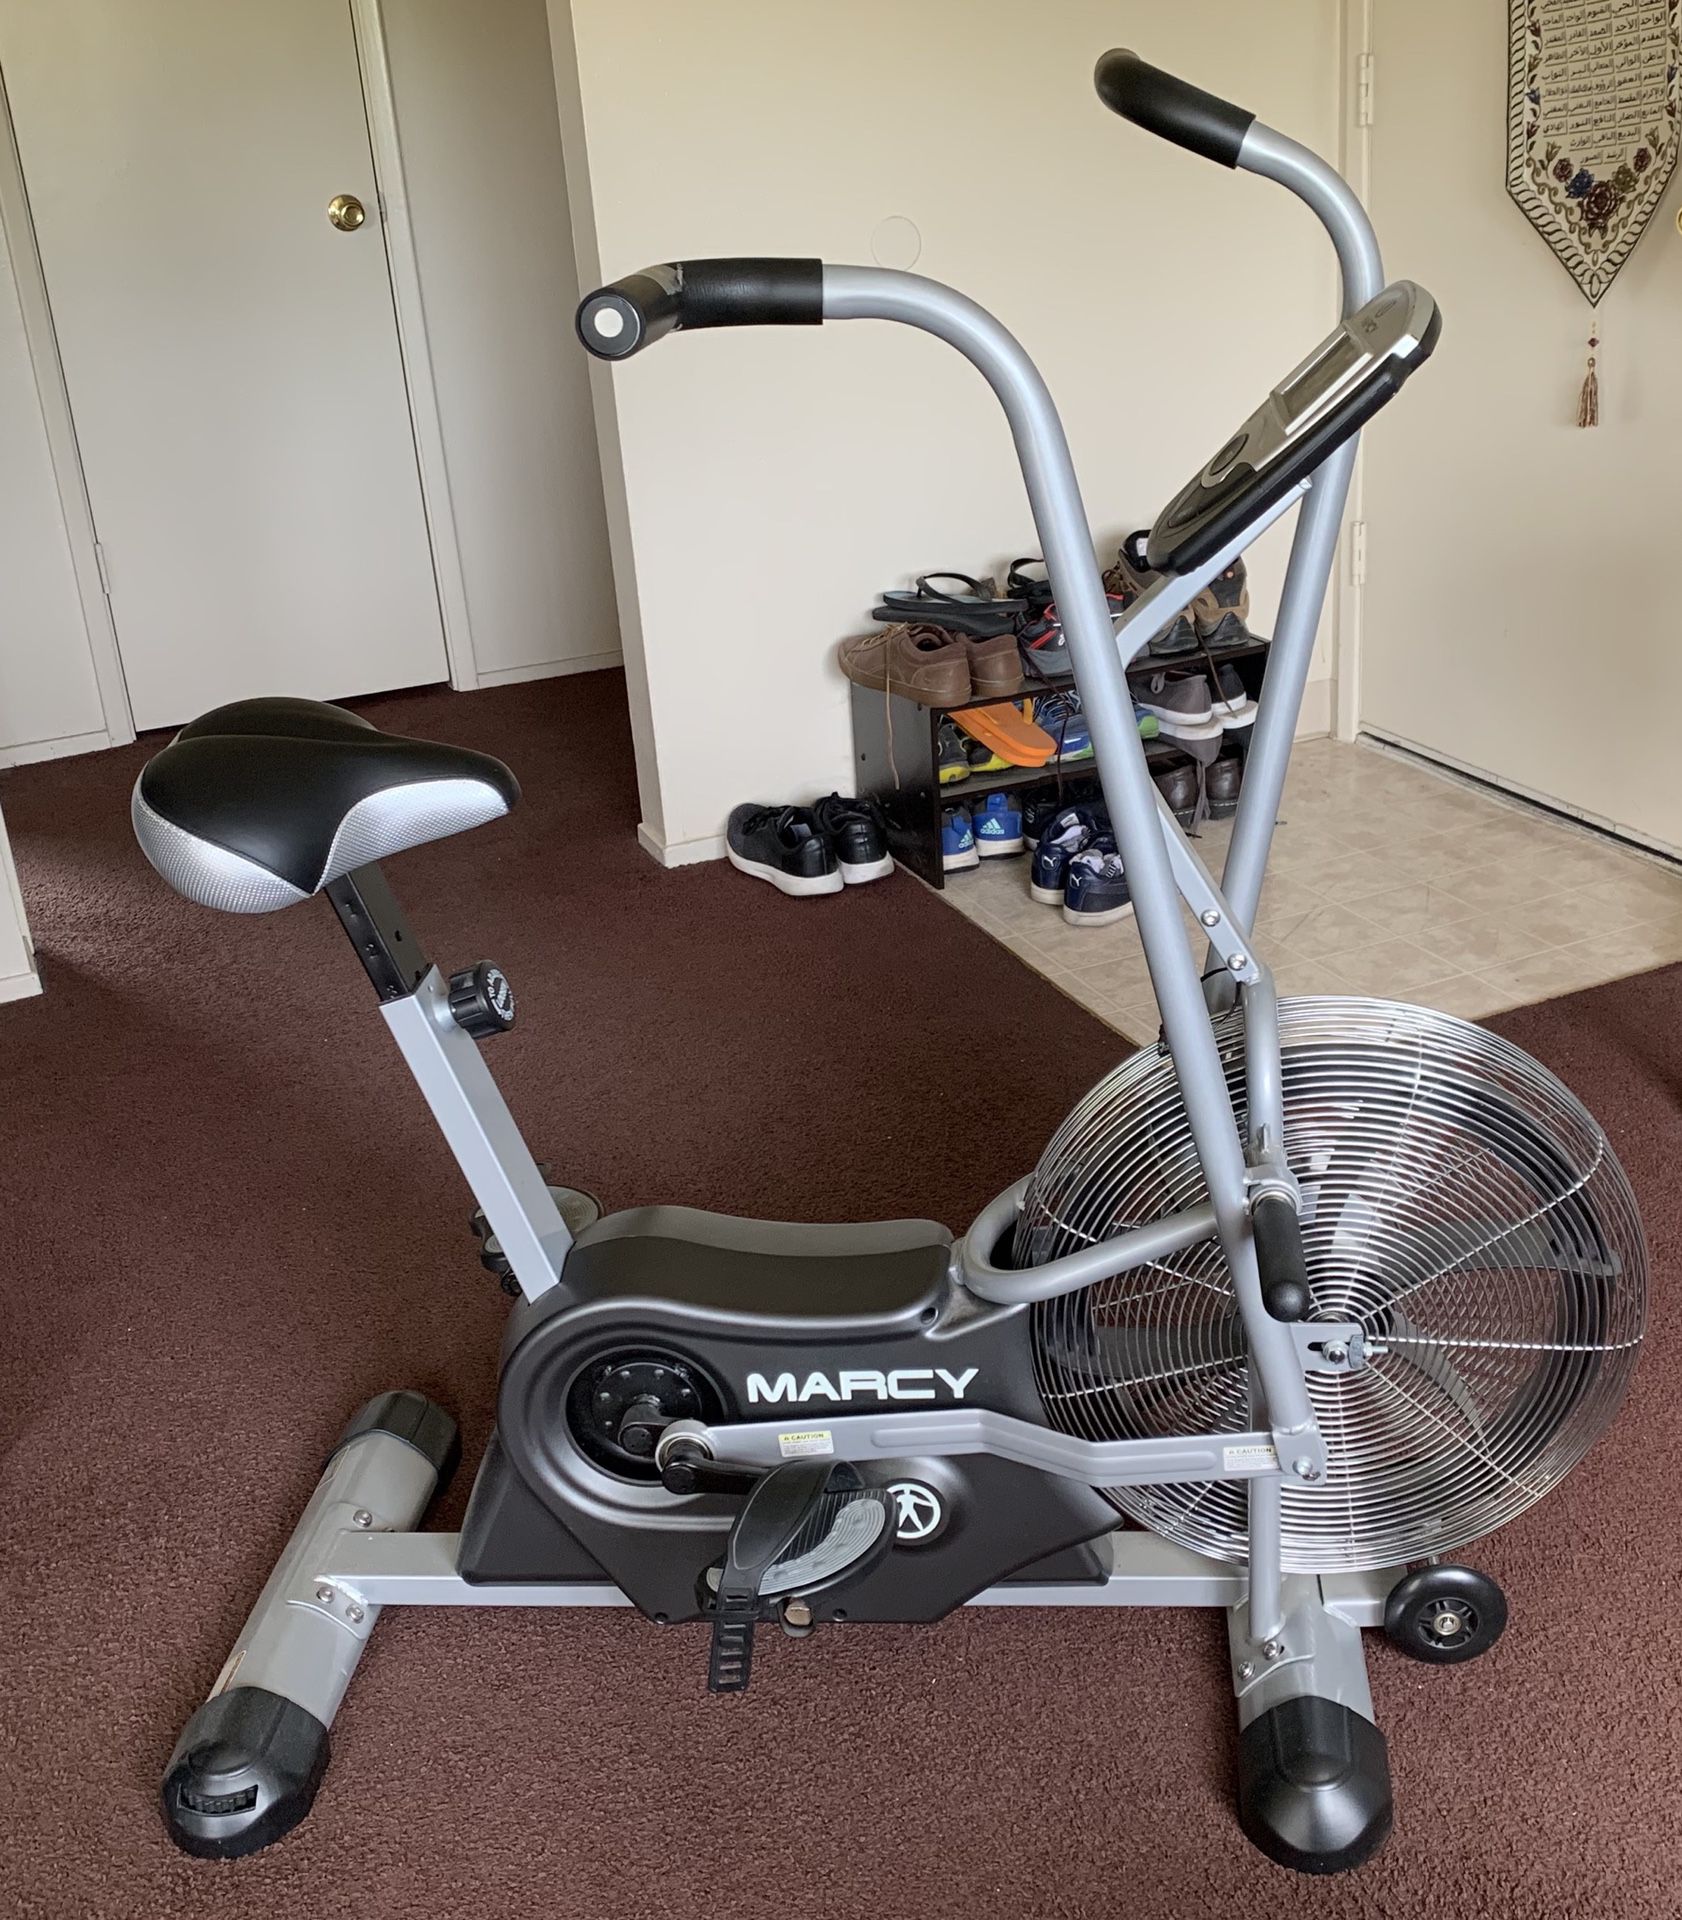 Marcy Exercise Fan Bike